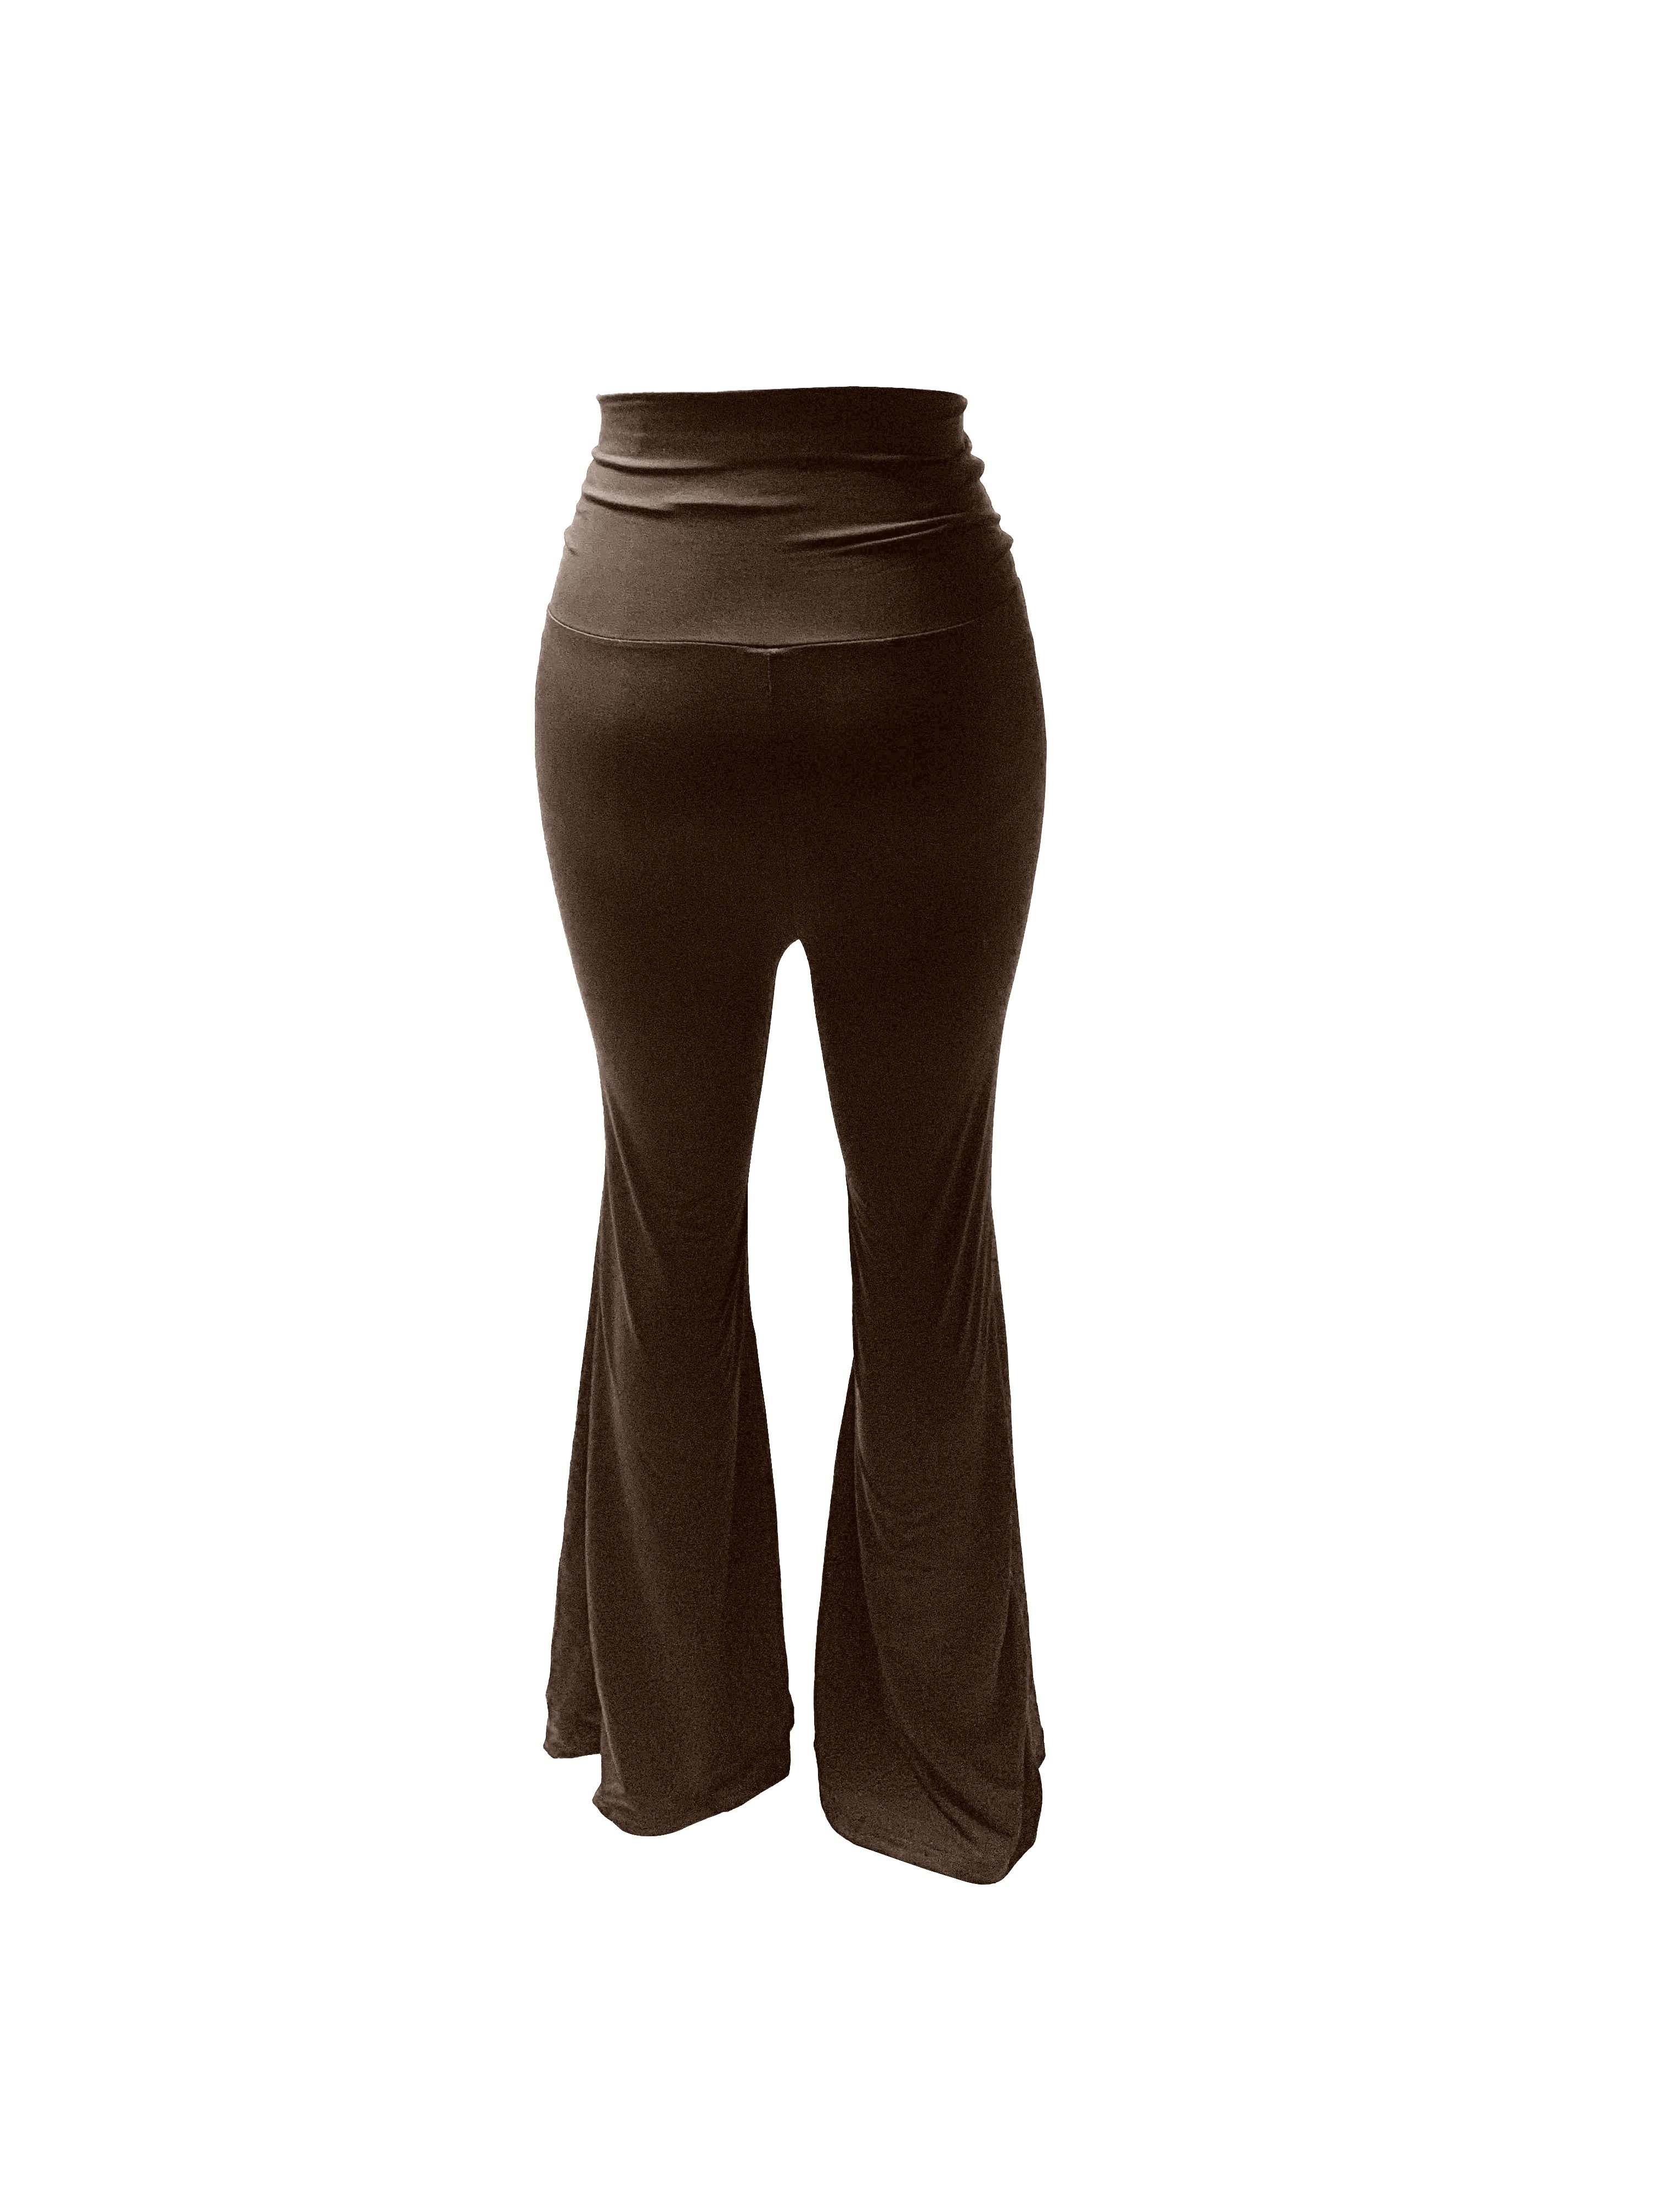 Women's Flare Leg Pants Cut Out Yoga Style High Waist Quick Dry Pilates  Dance Pants Dancewear Bottoms Black Brown Sports Activewear Micro-elastic  Slim